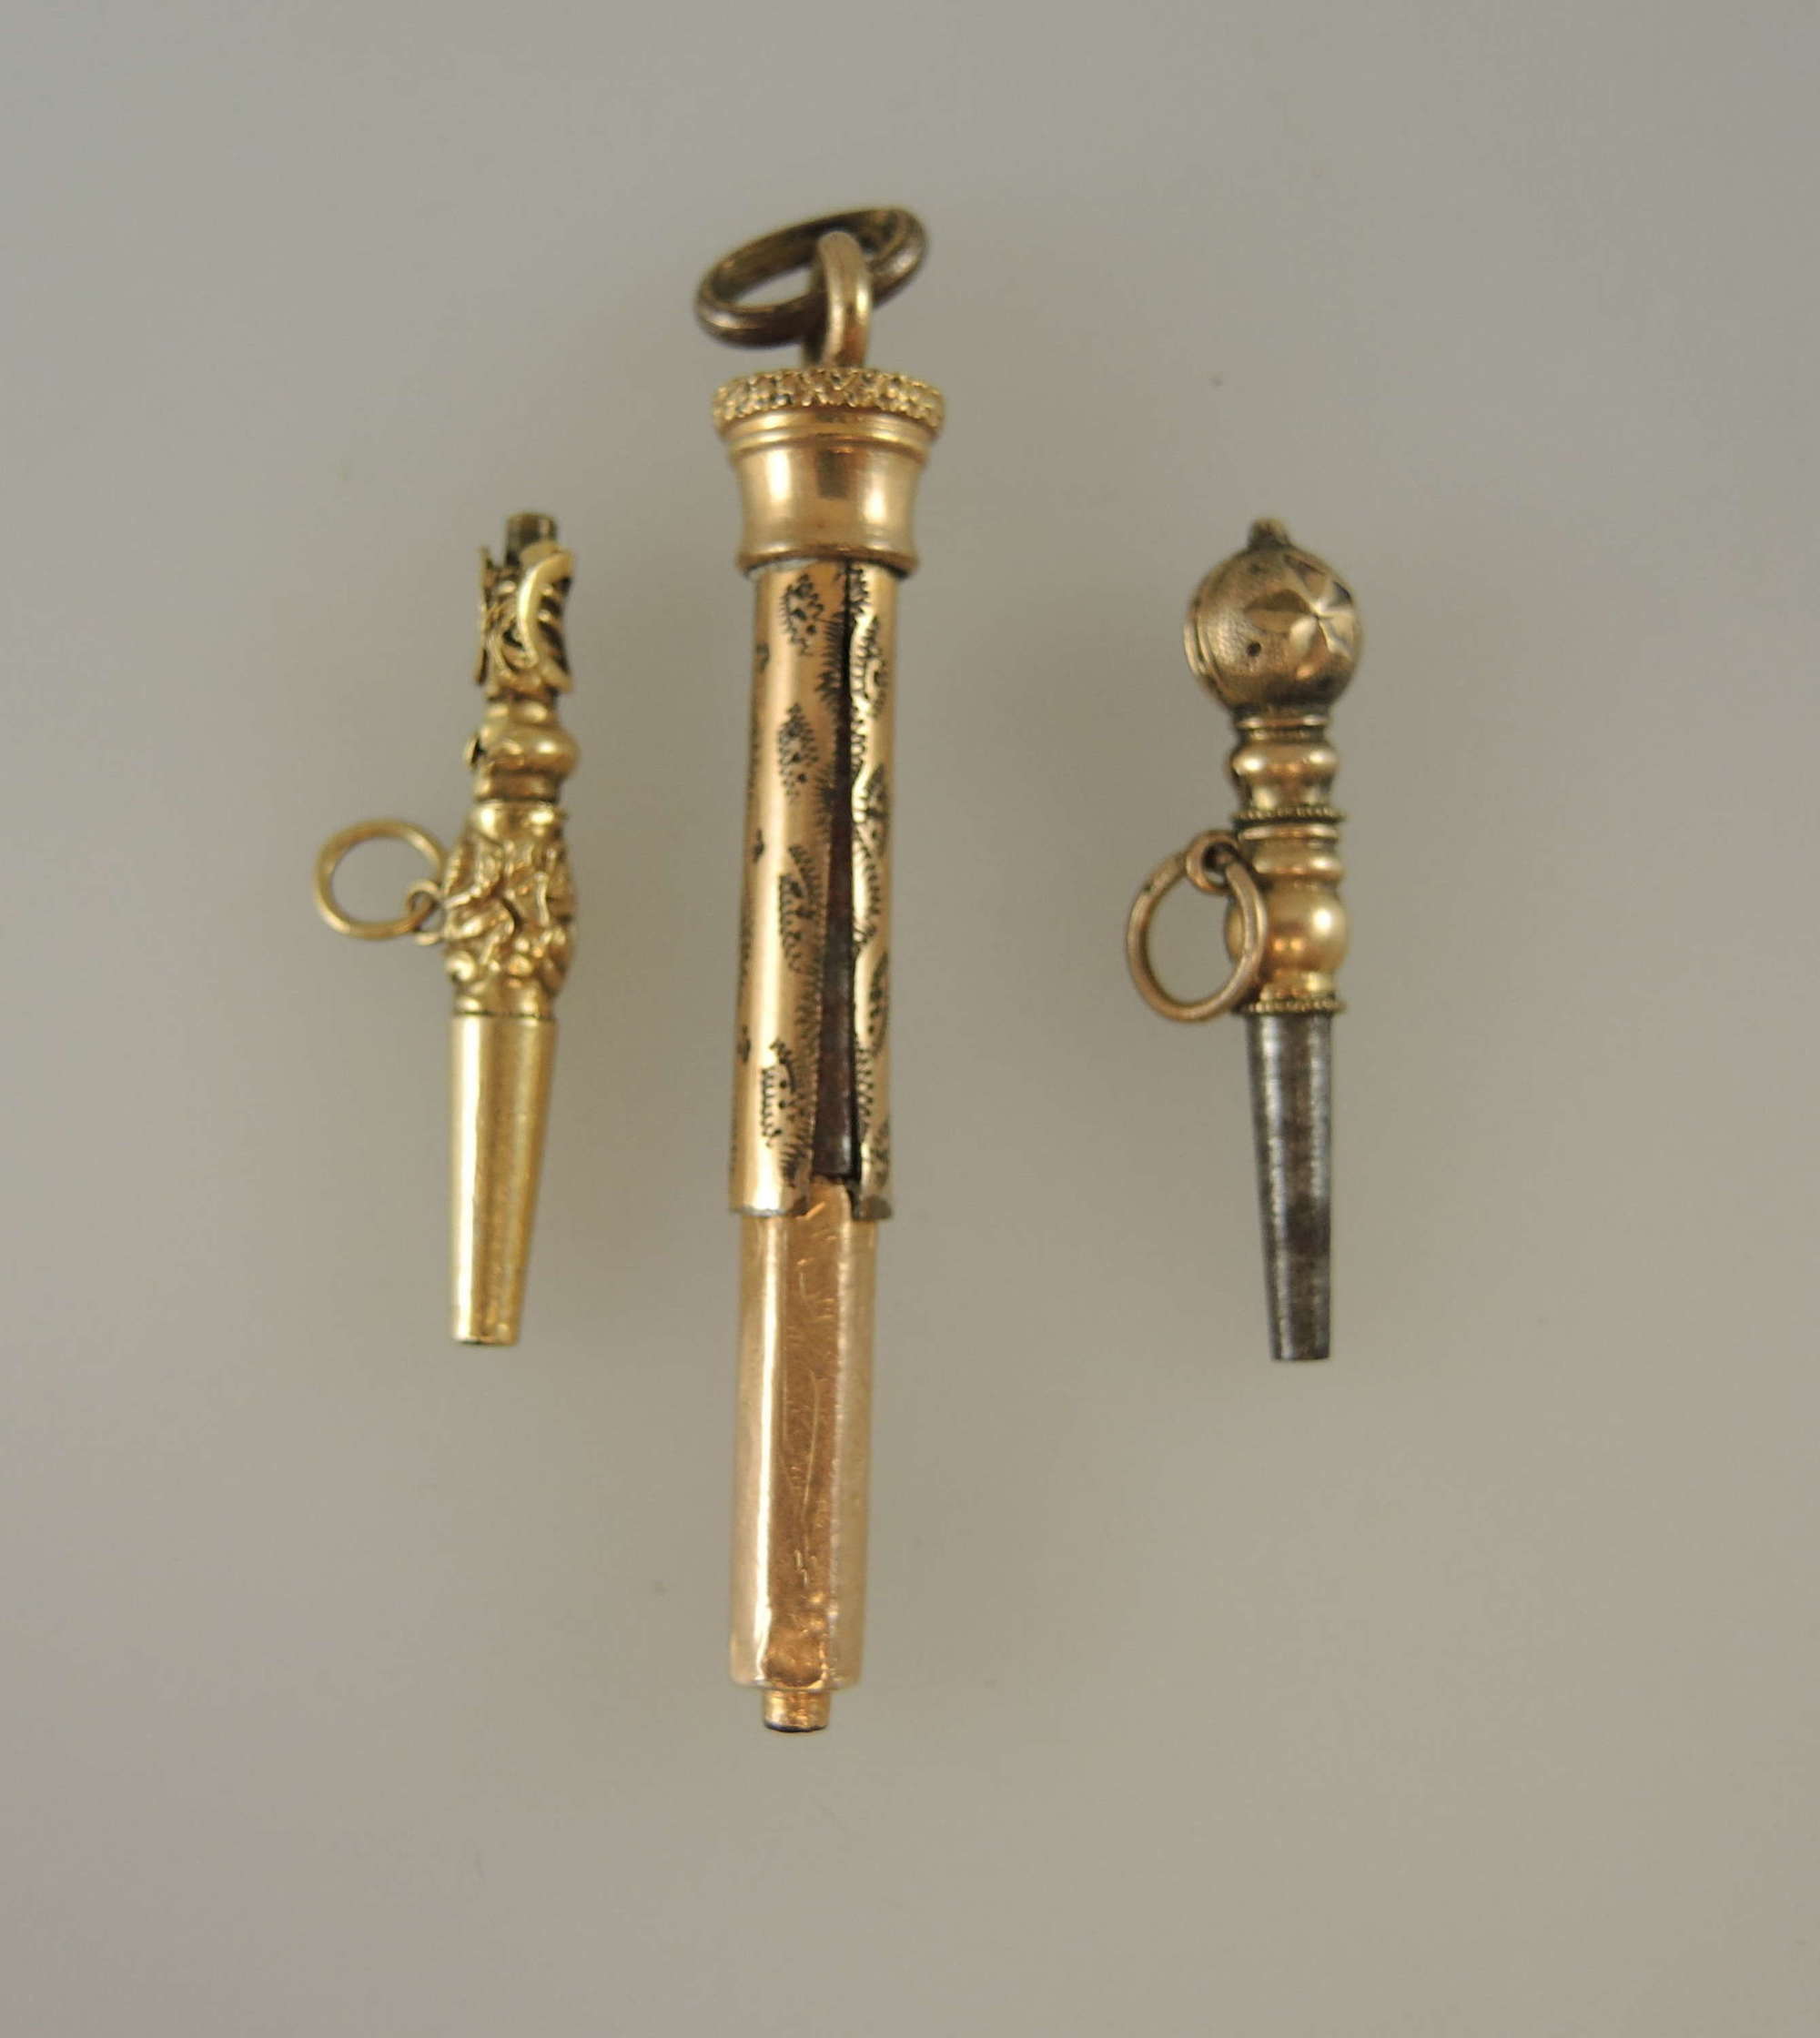 Group of 3 gold pocket watch keys c1800 – 1825